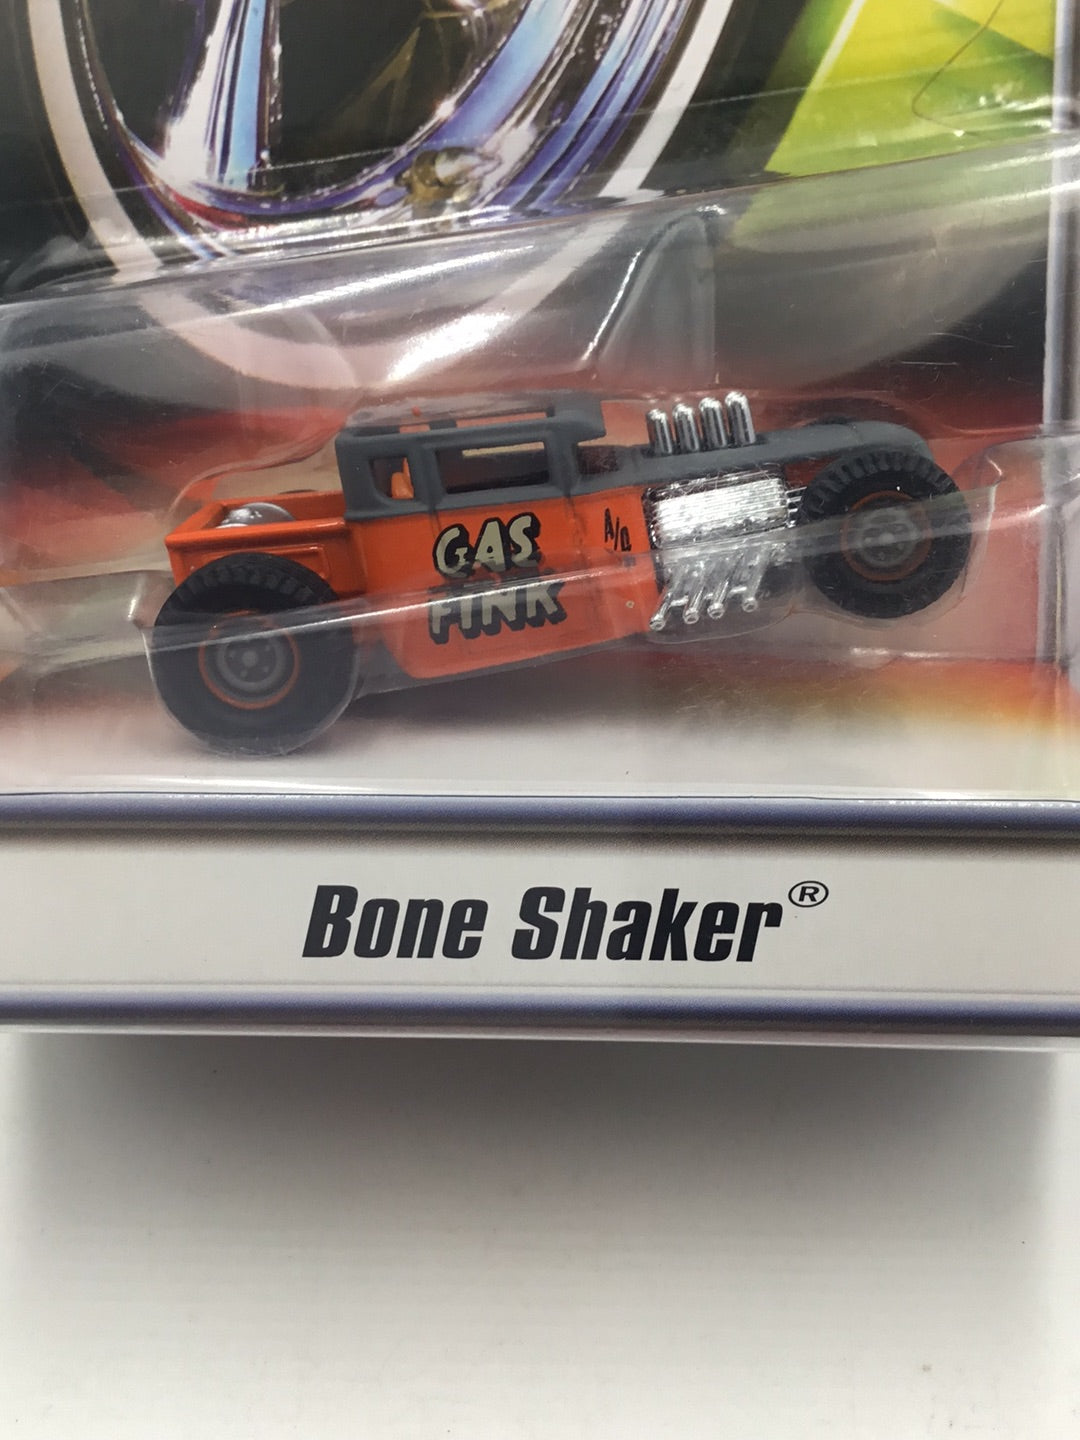 Hot wheels custom classics Bone Shaker Gas Fink